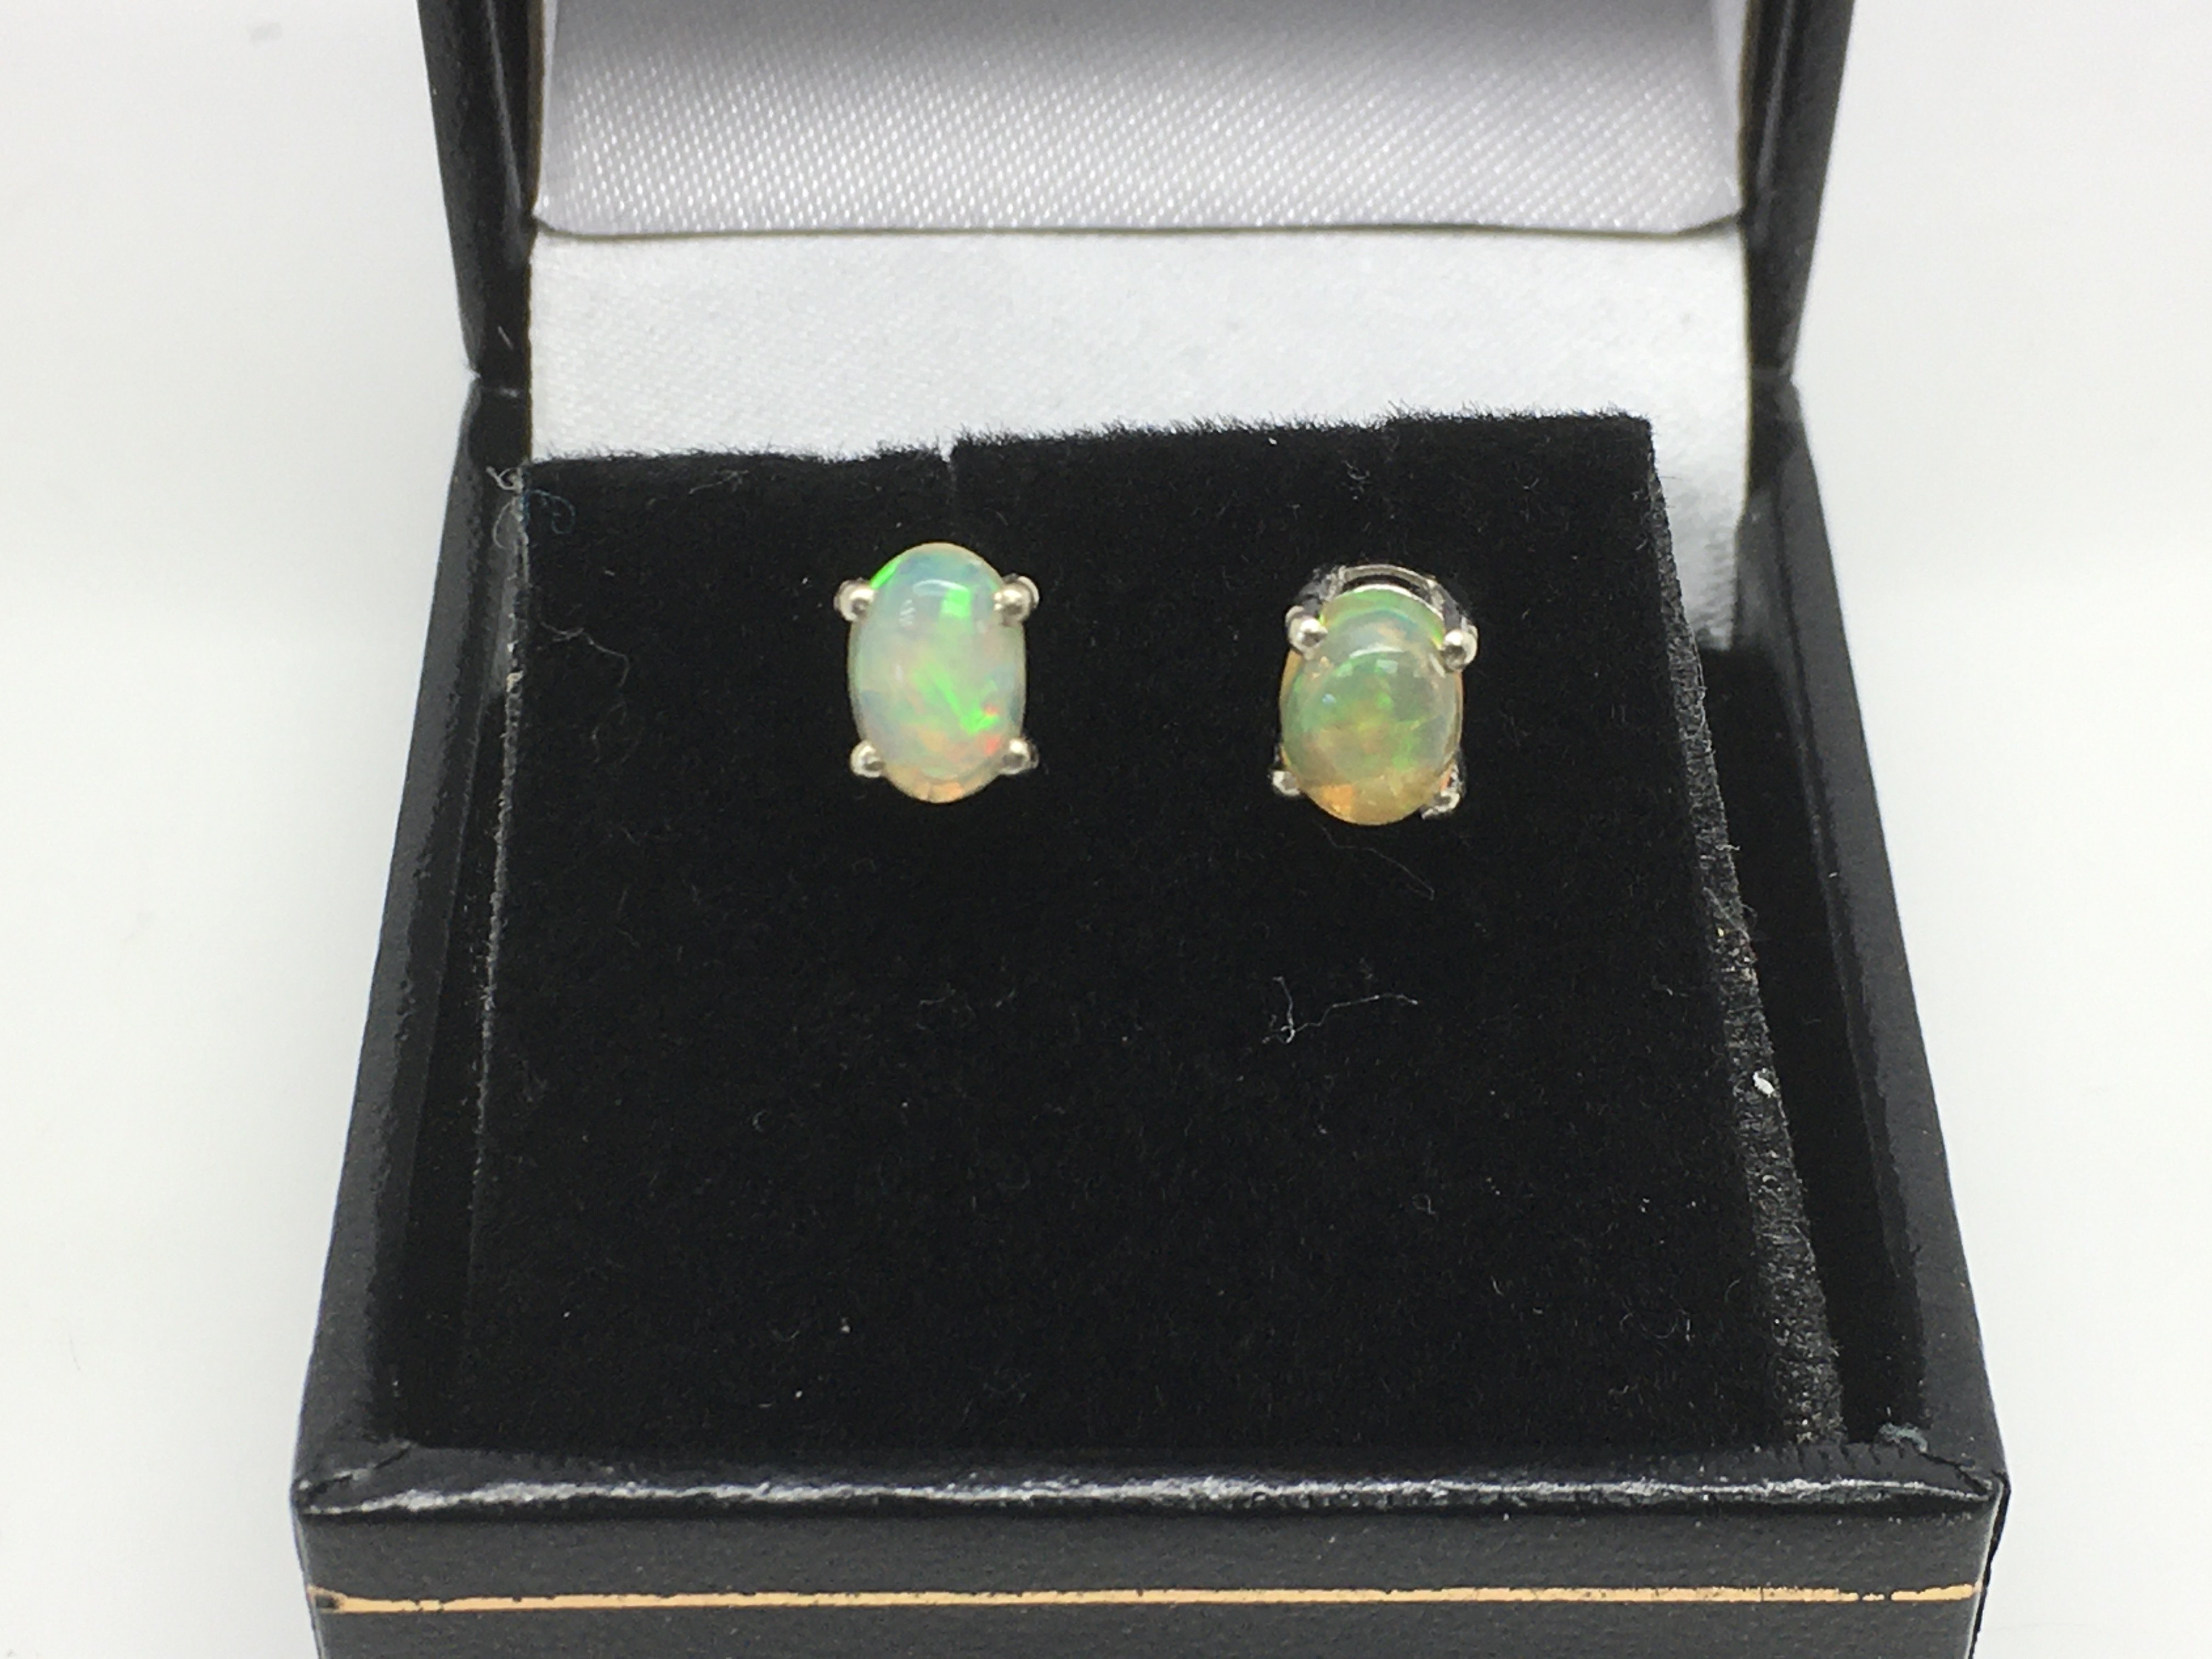 A boxed pair of white Ethiopian opal ear studs set